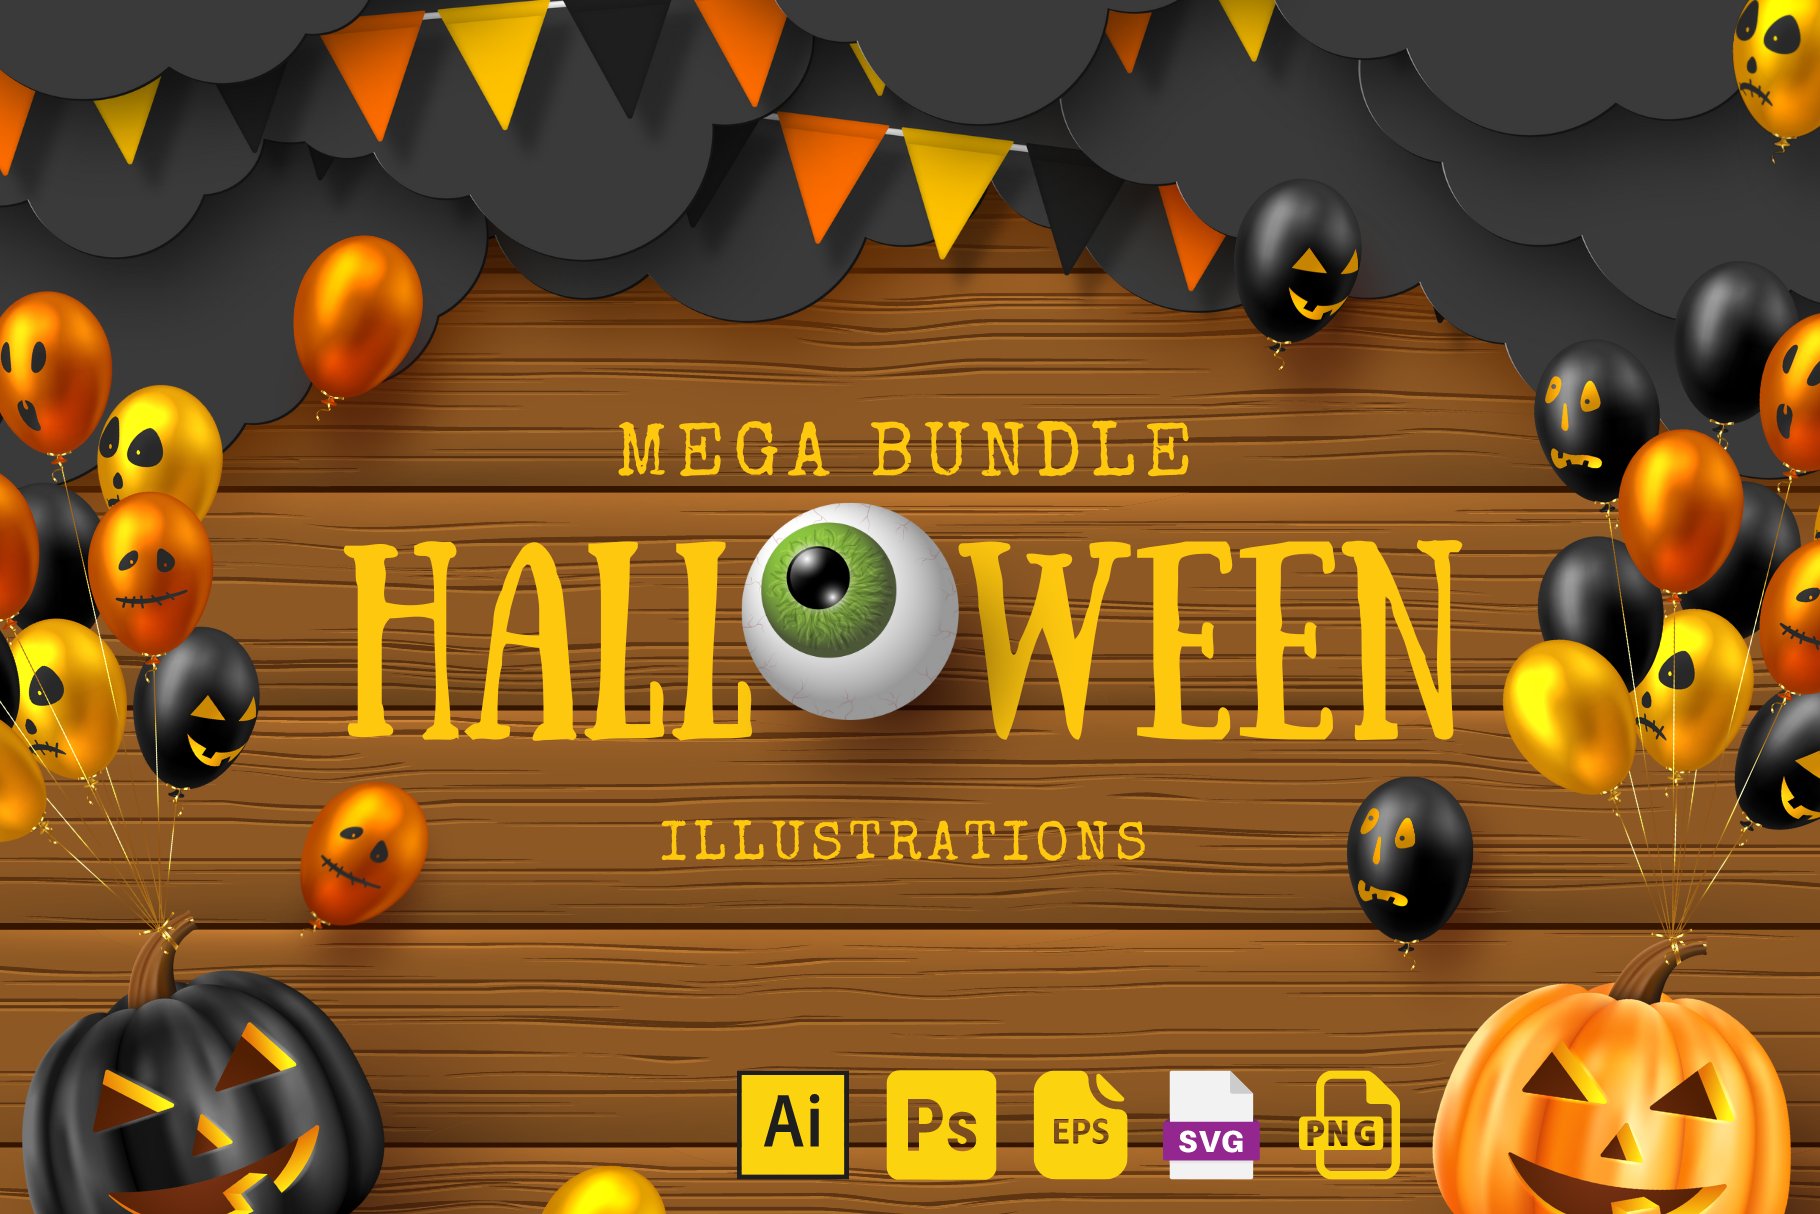 Halloween mega illustrations Bundle cover image.